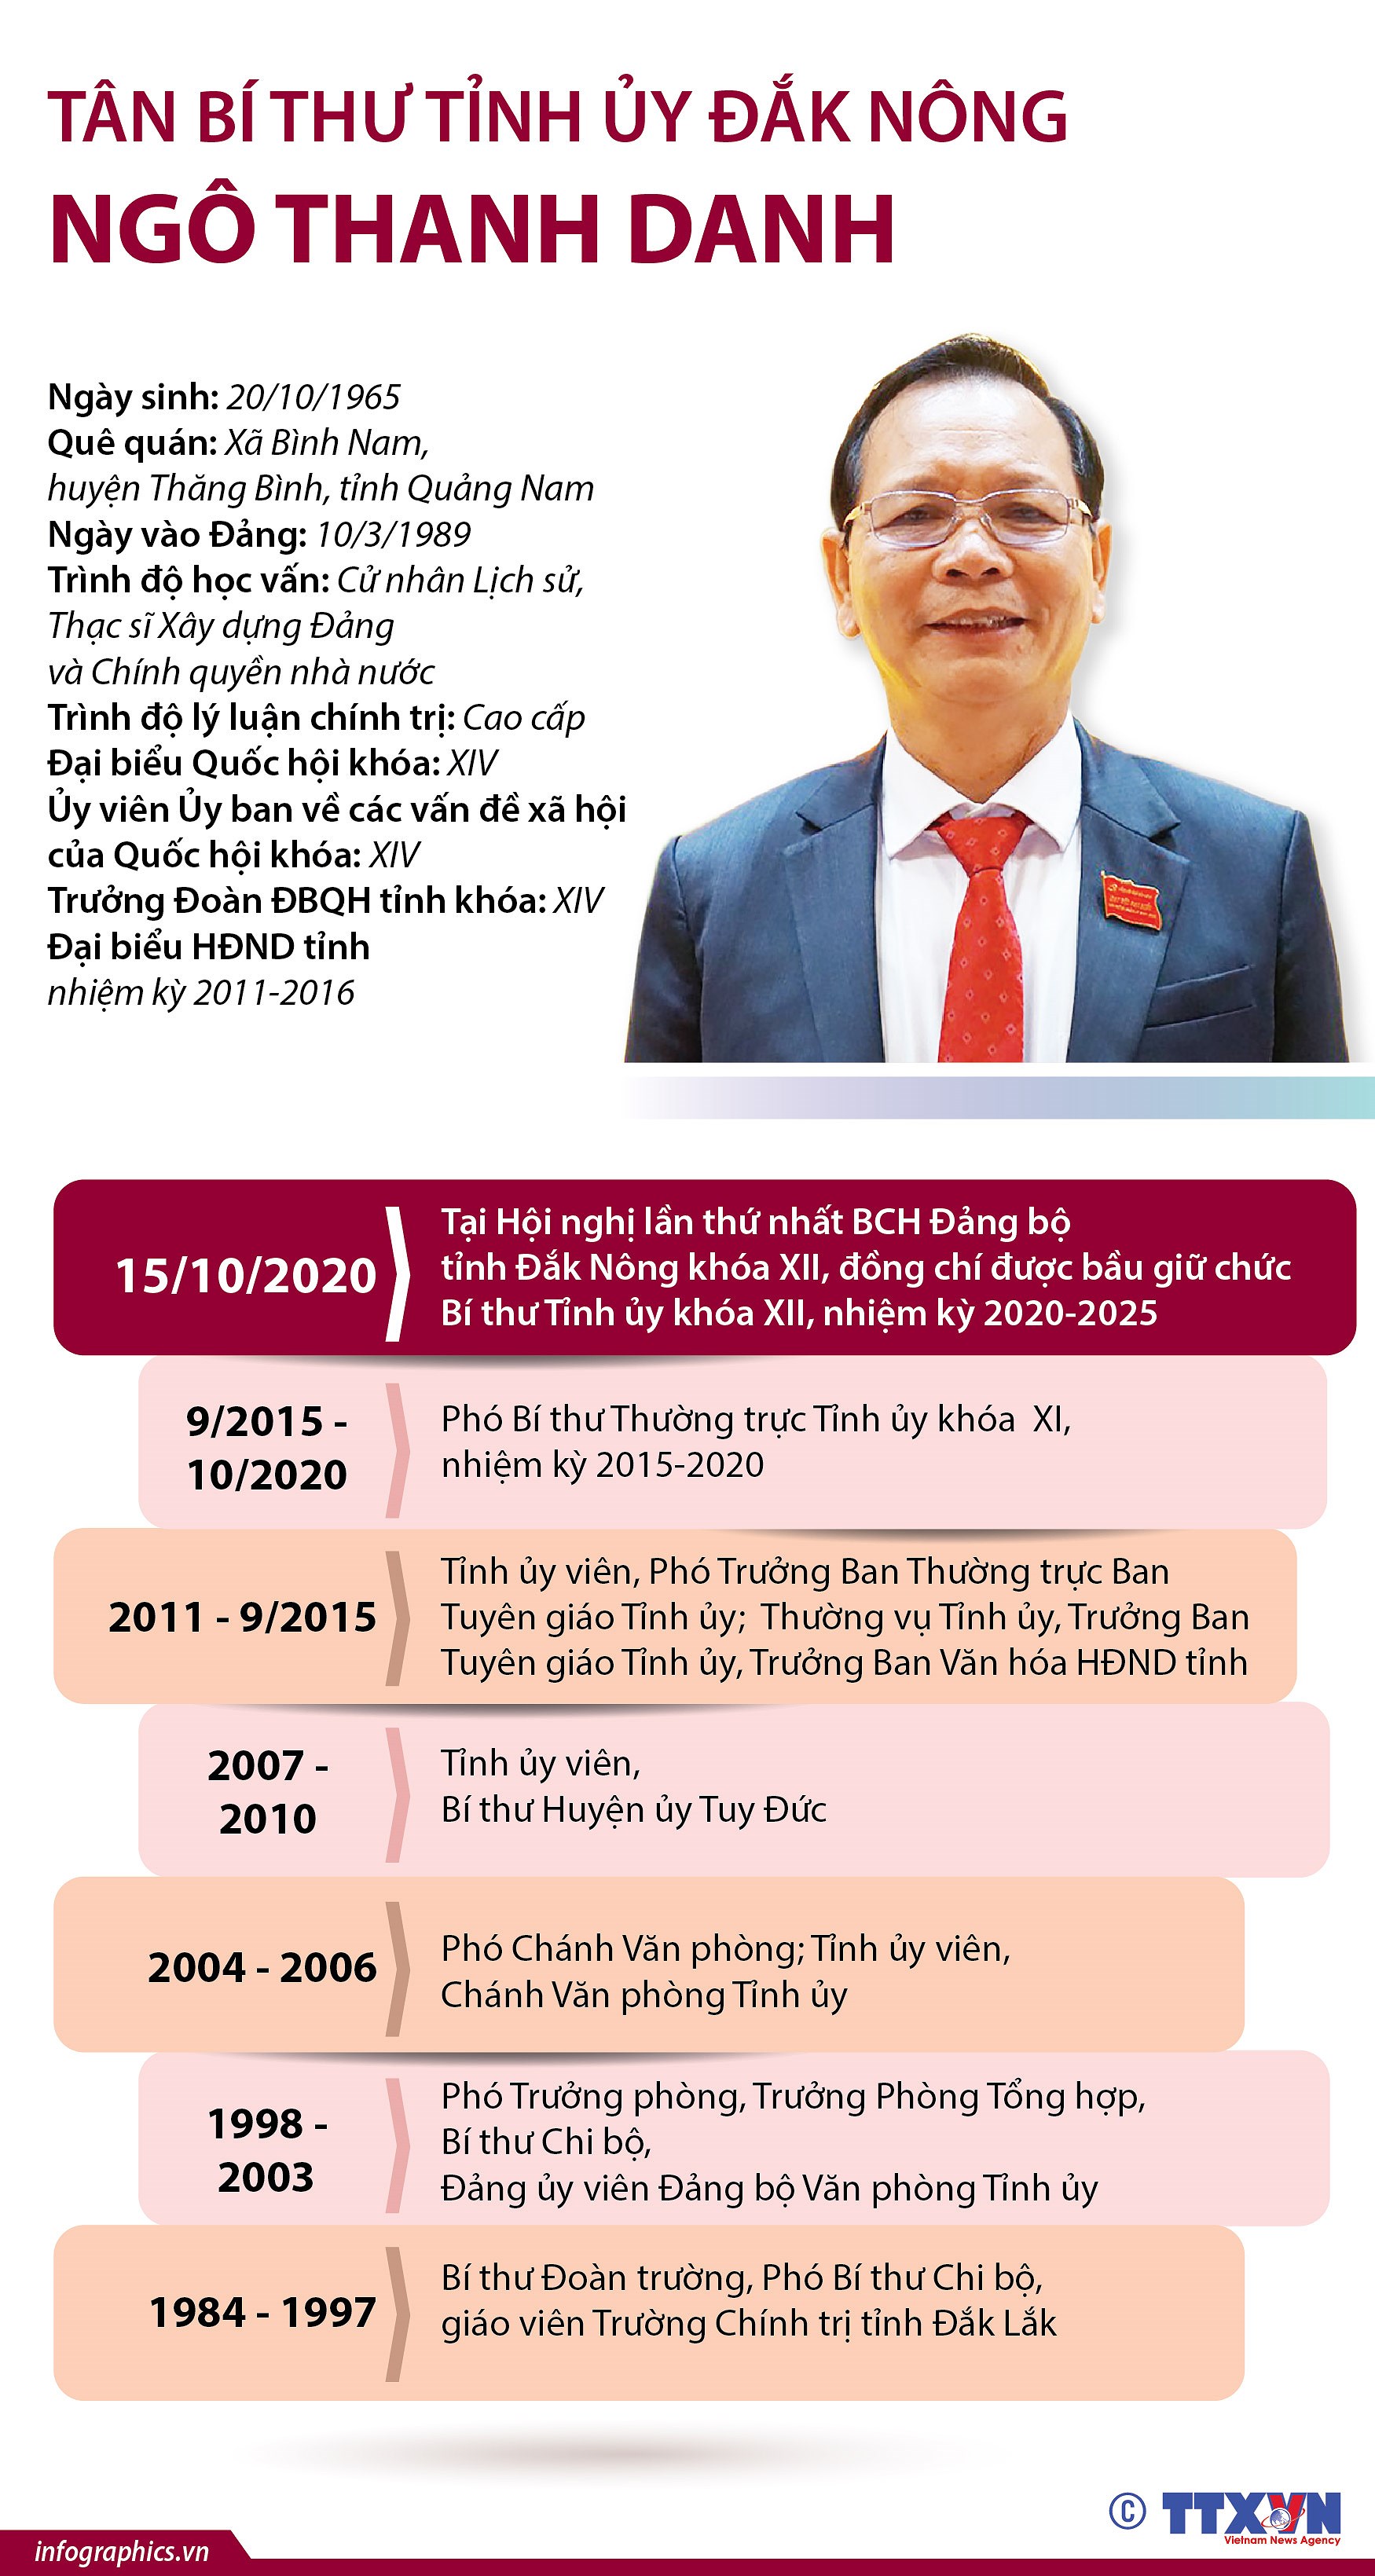 [Infographics] Tan Bi thu Tinh uy Dak Nong Ngo Thanh Danh hinh anh 1